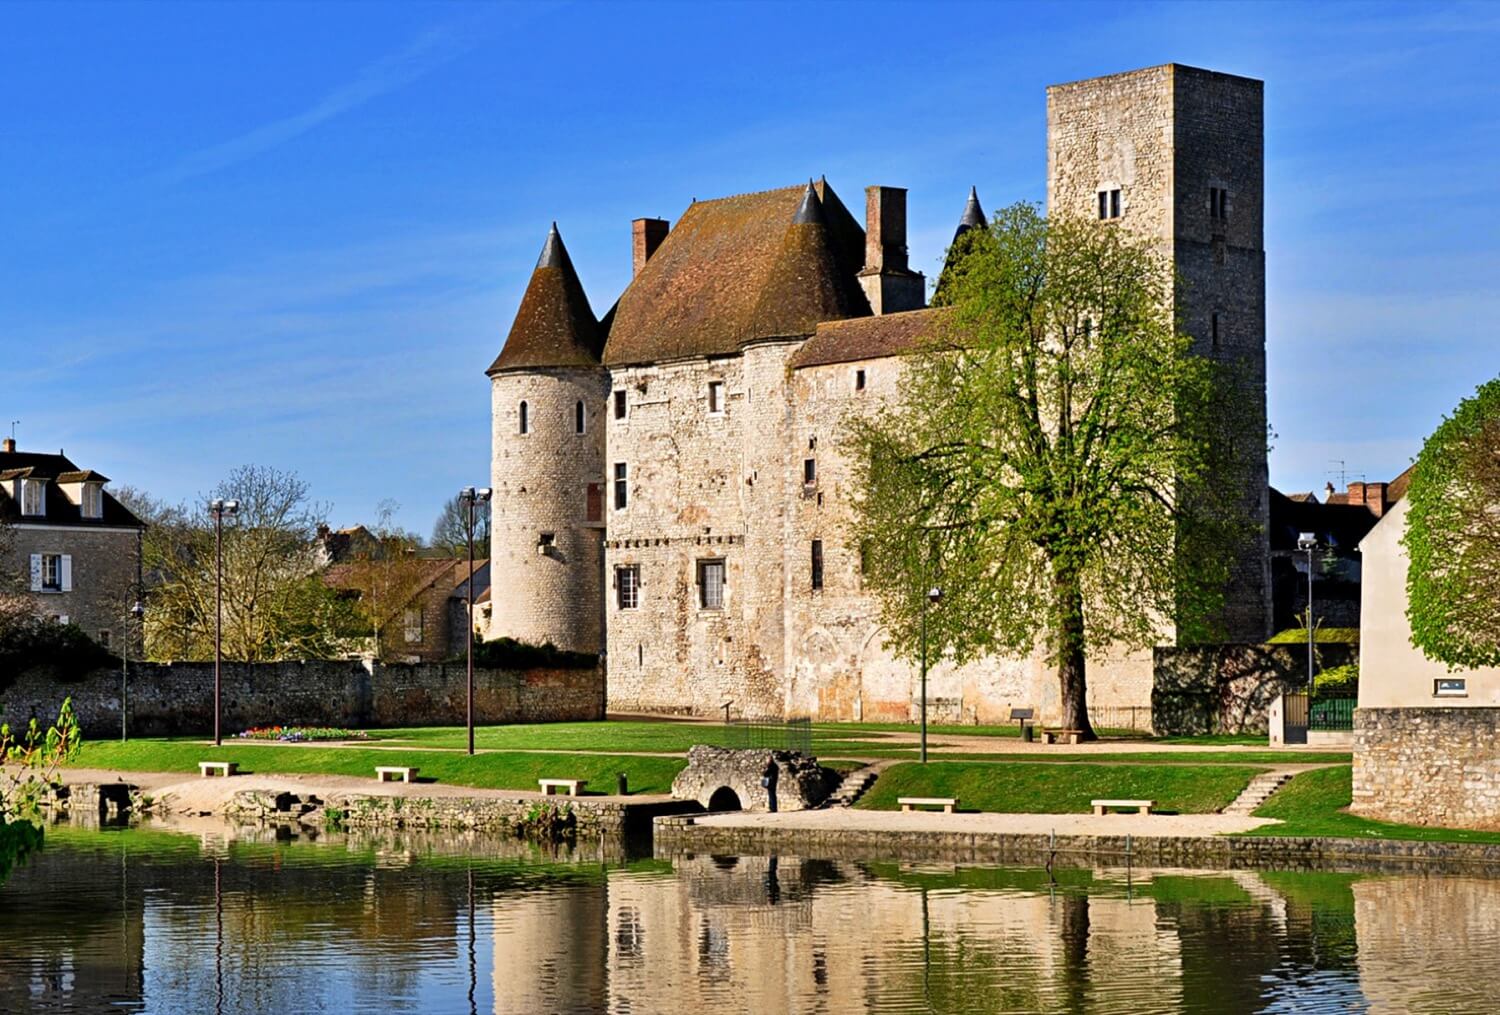 Château de Nemours